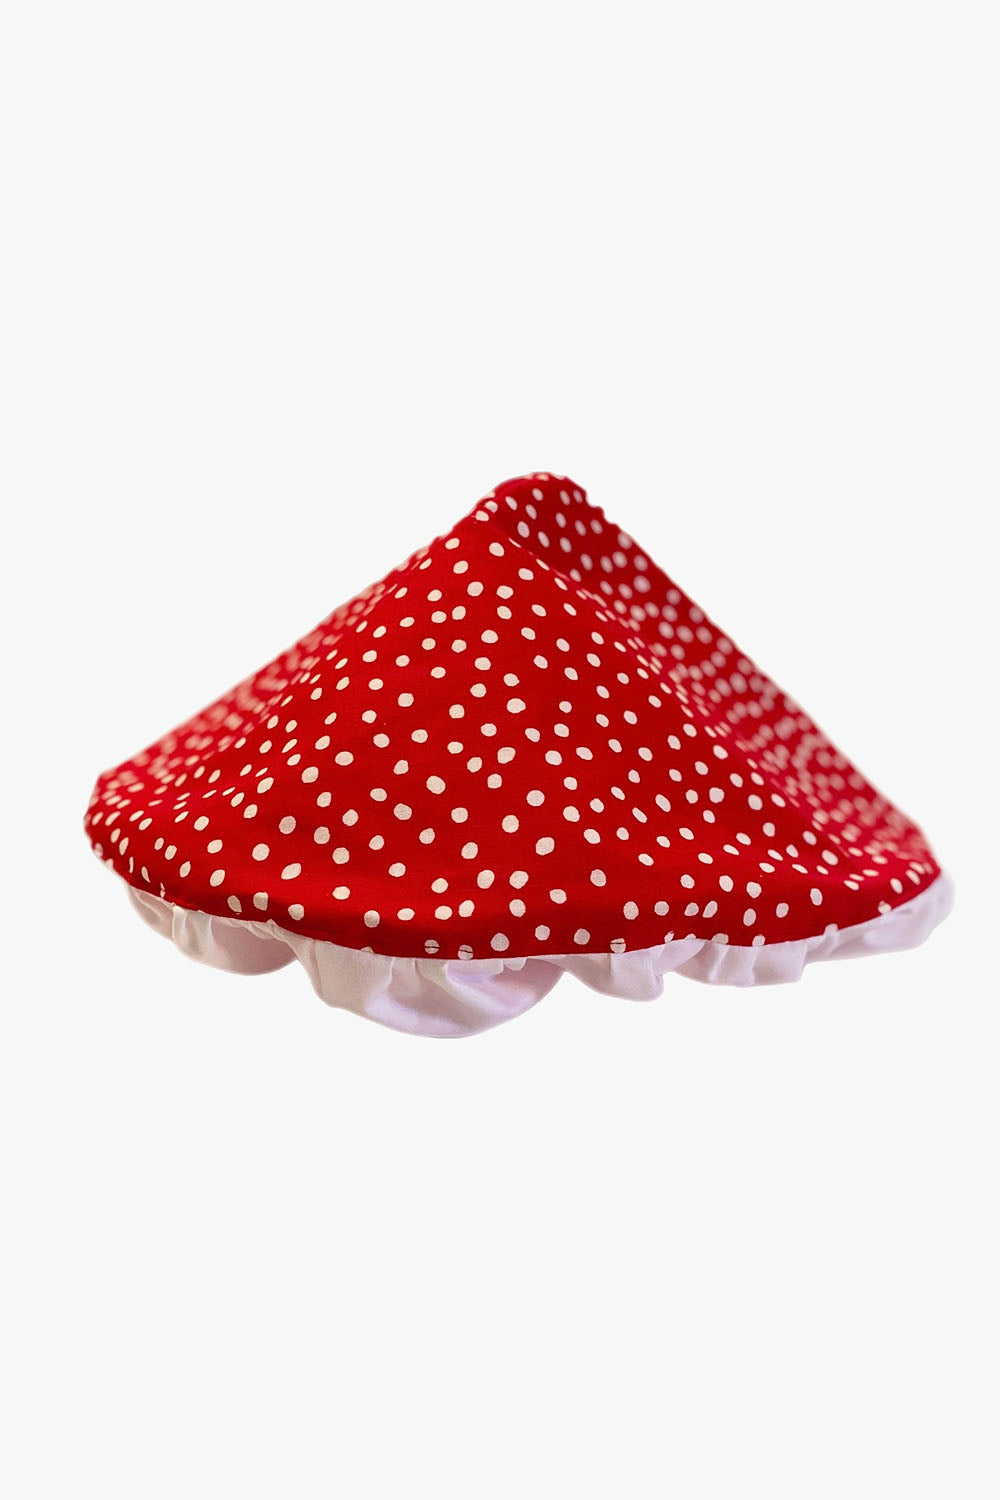 Magical Forest Toadstool Mushroom Hat